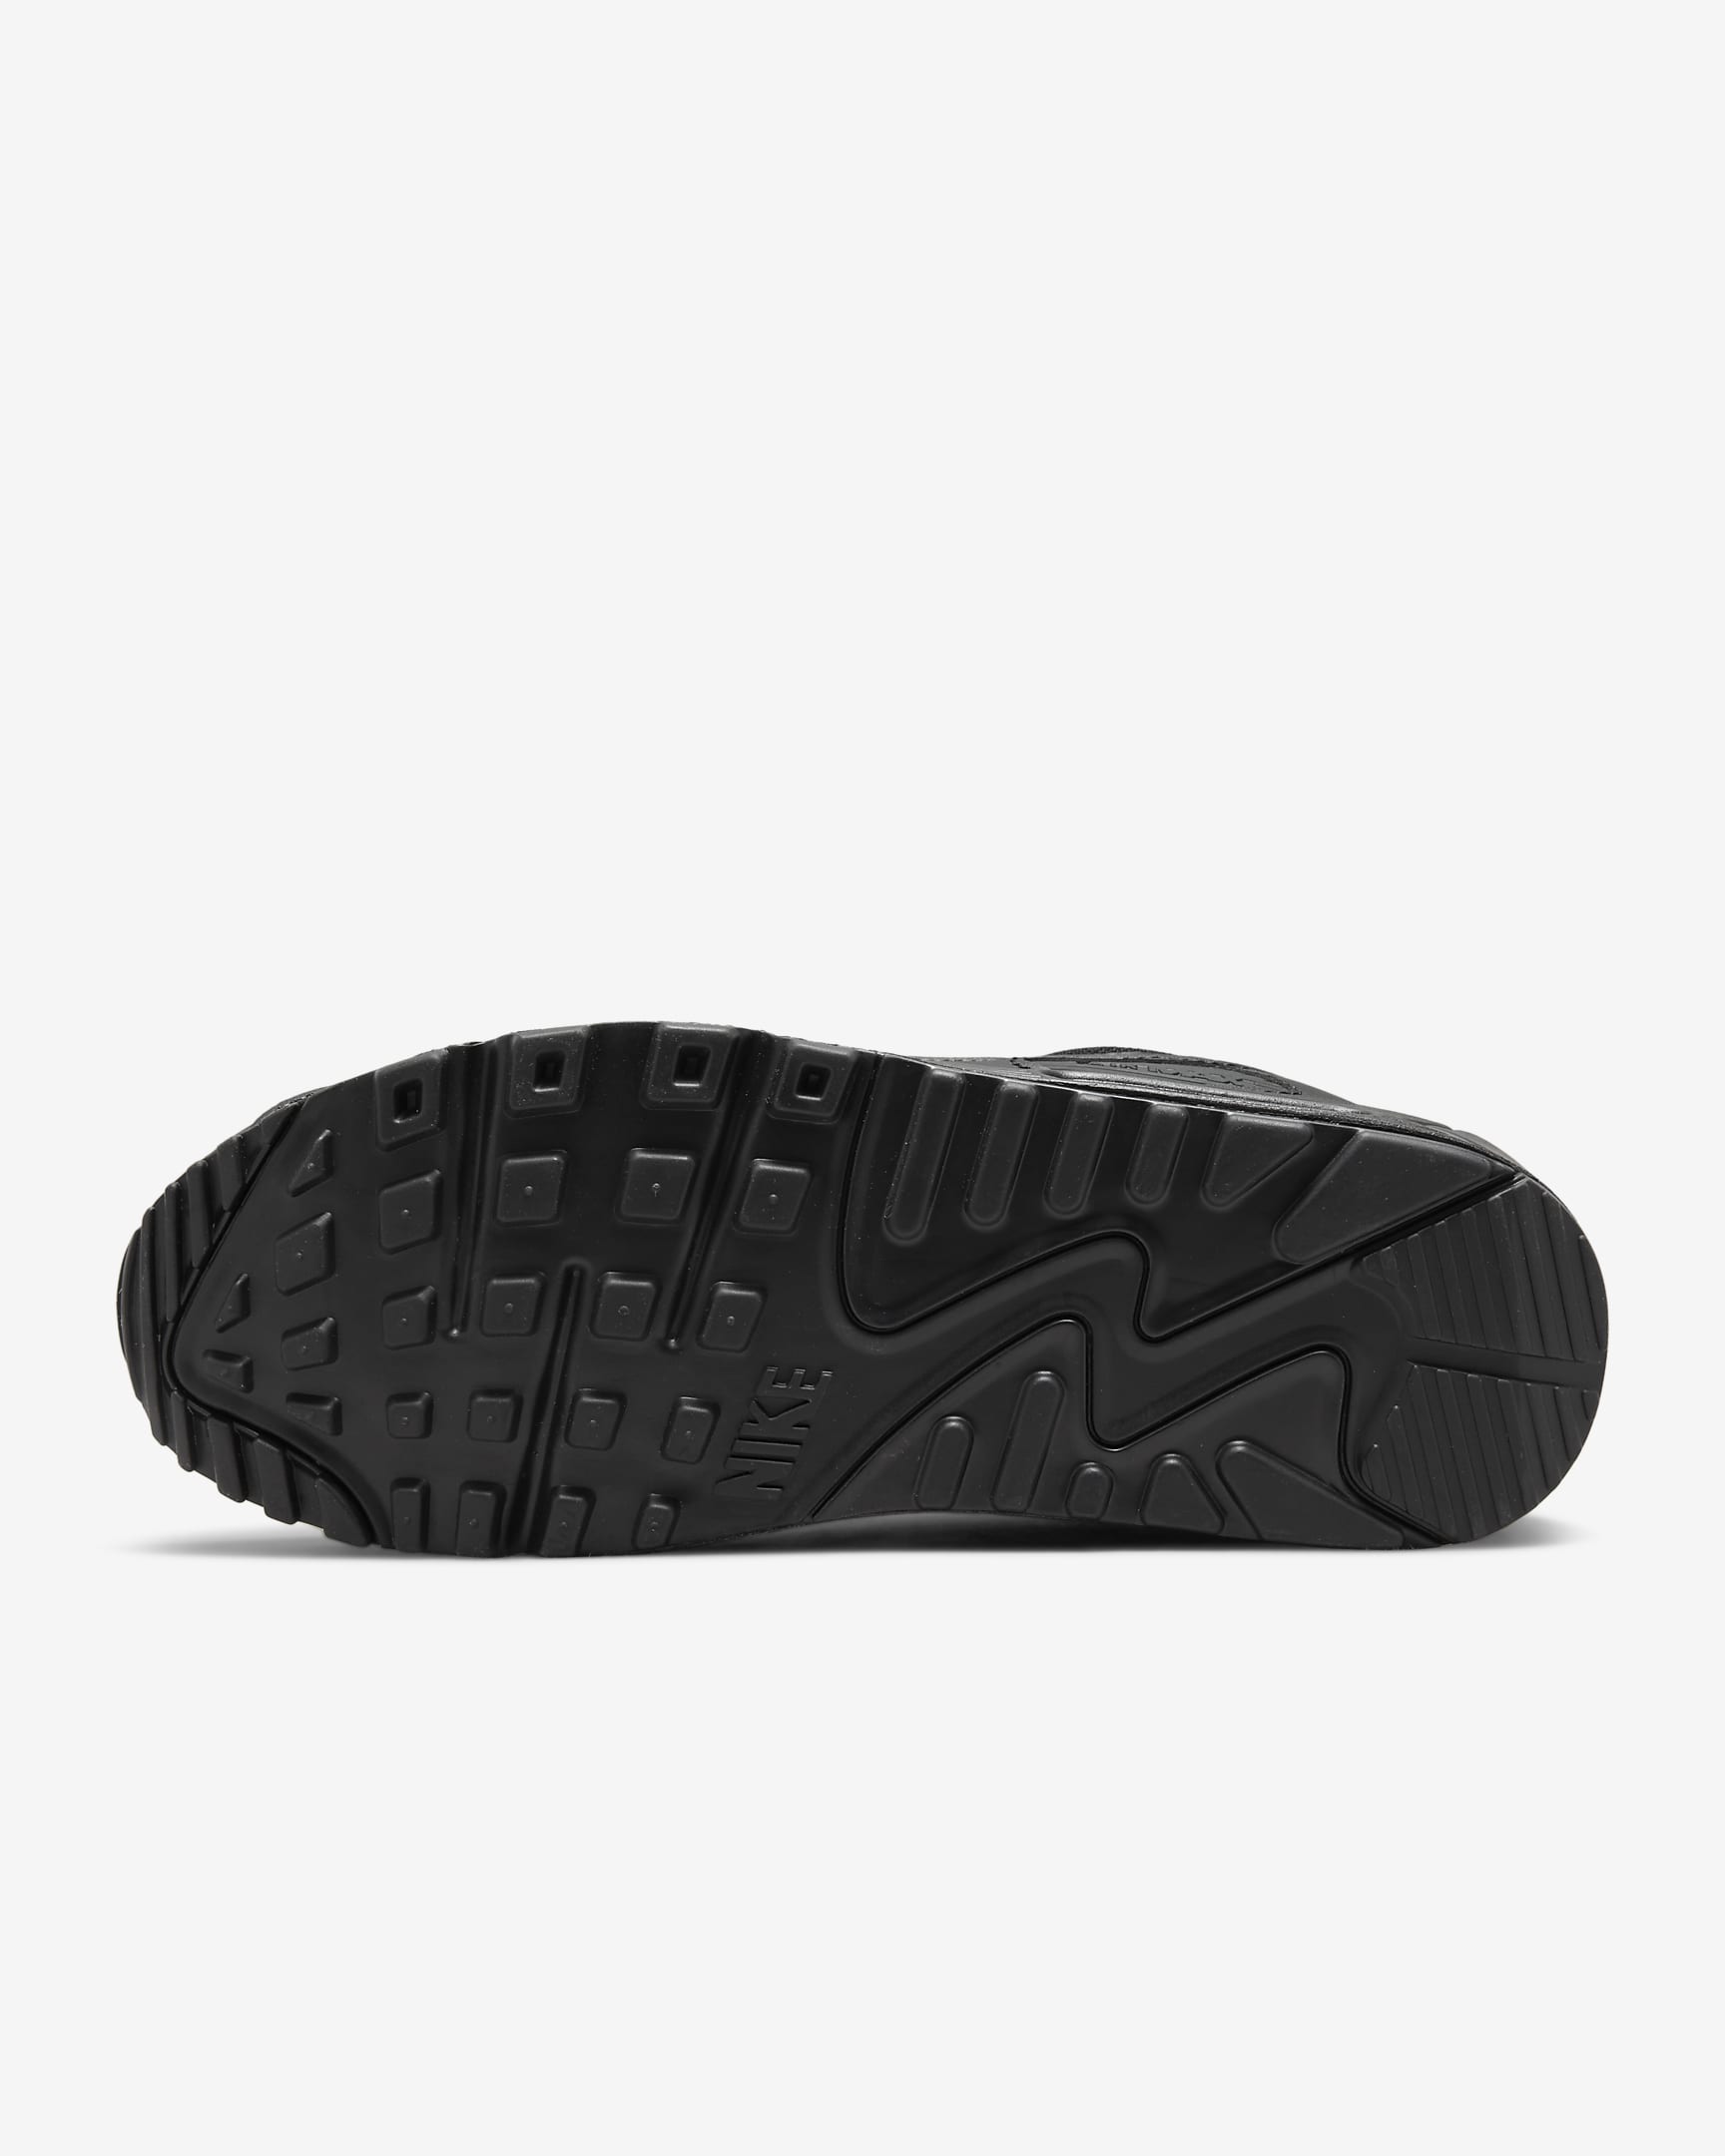 Nike Air Max 90 Women's Shoes - Black/Black/Black/Black